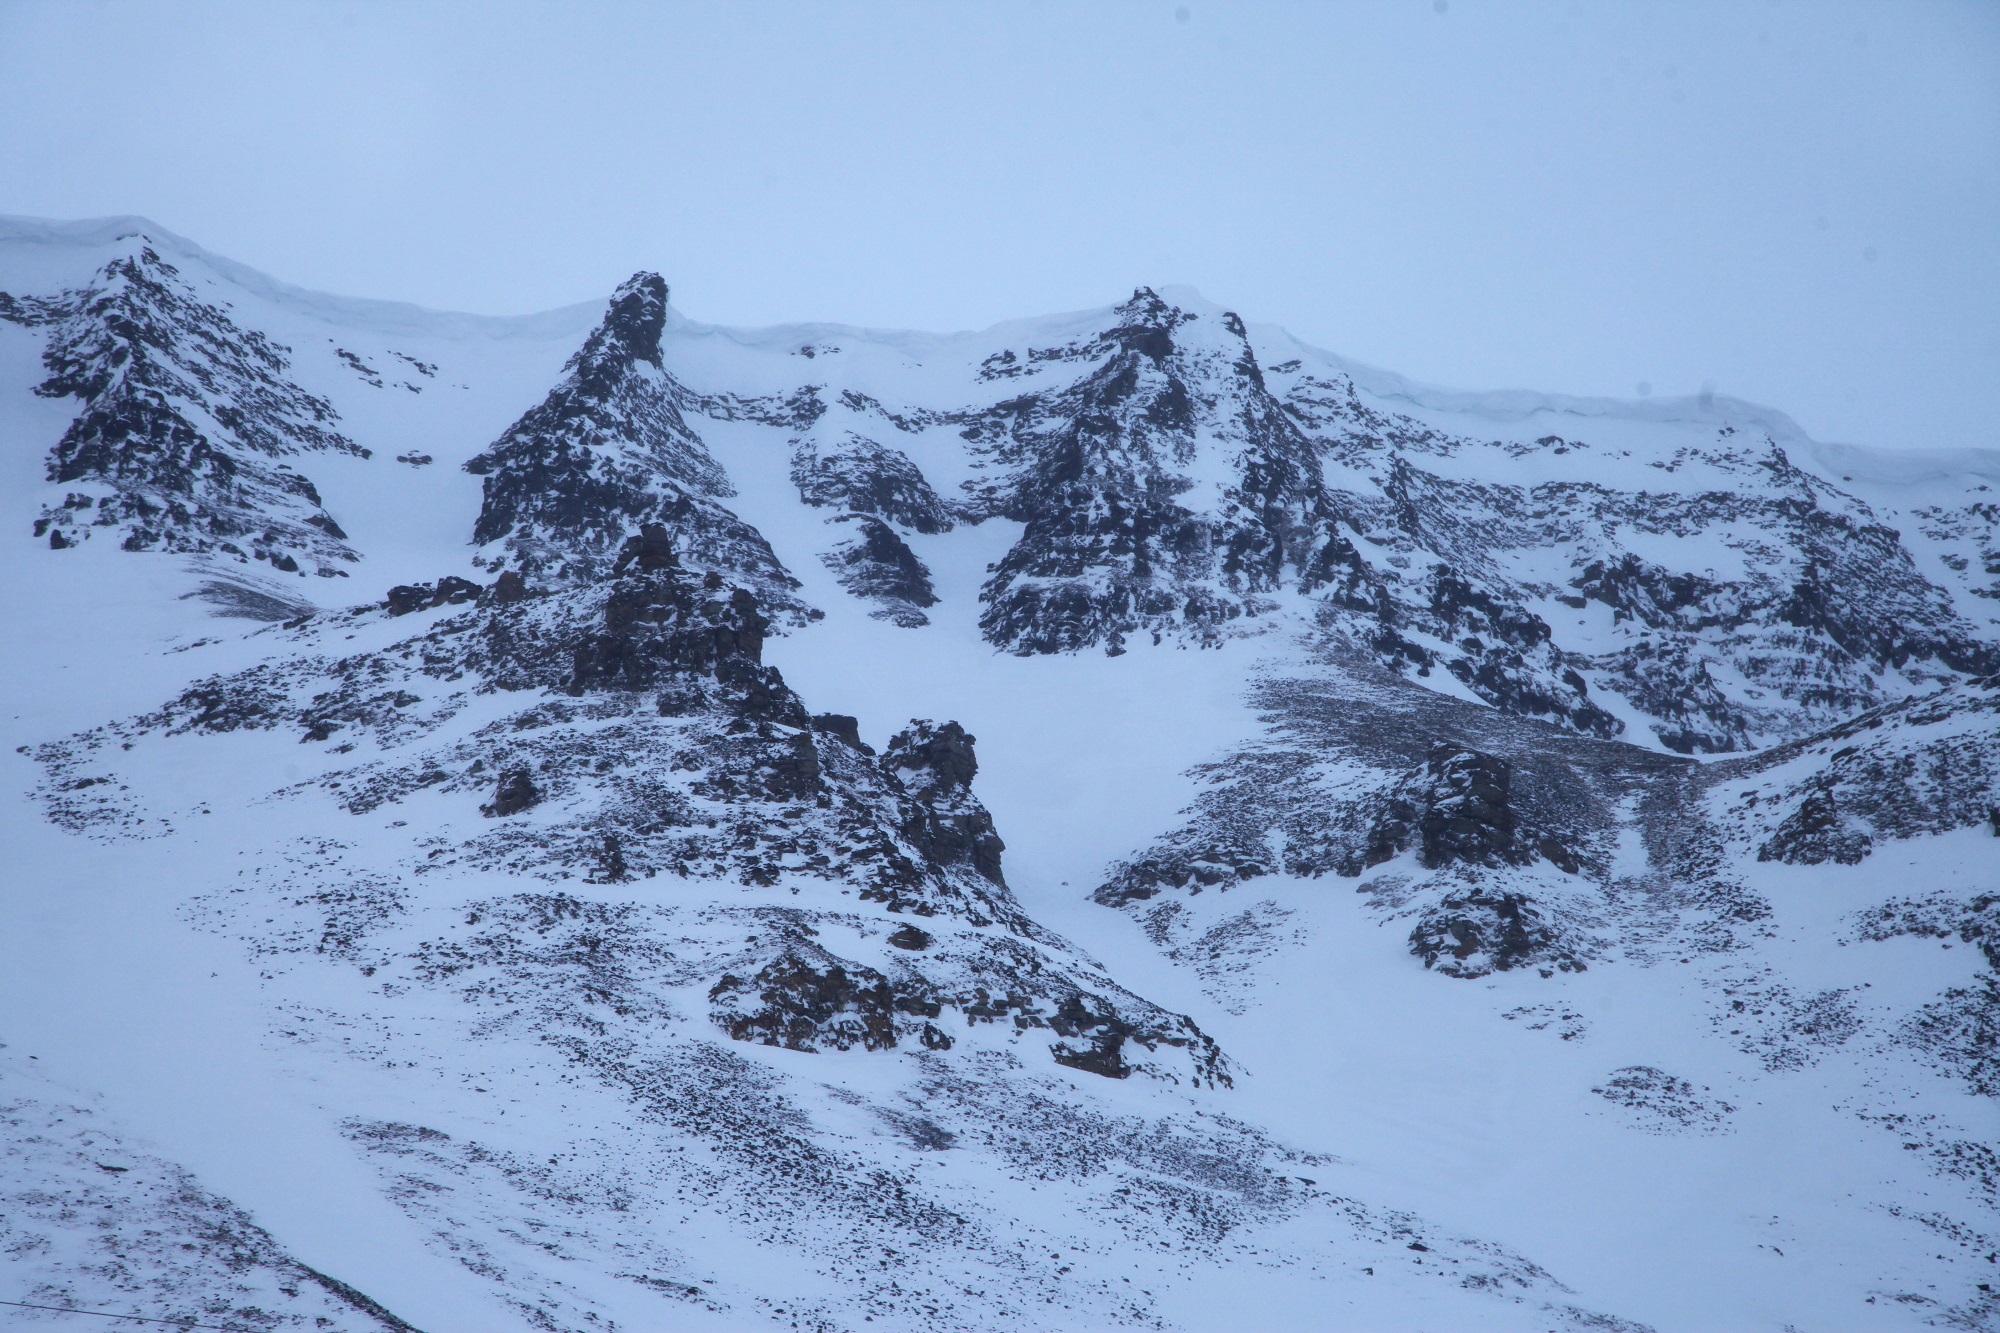 Fire personer, inkludert utenlandske turister, omkom i tre snøskred i Norge